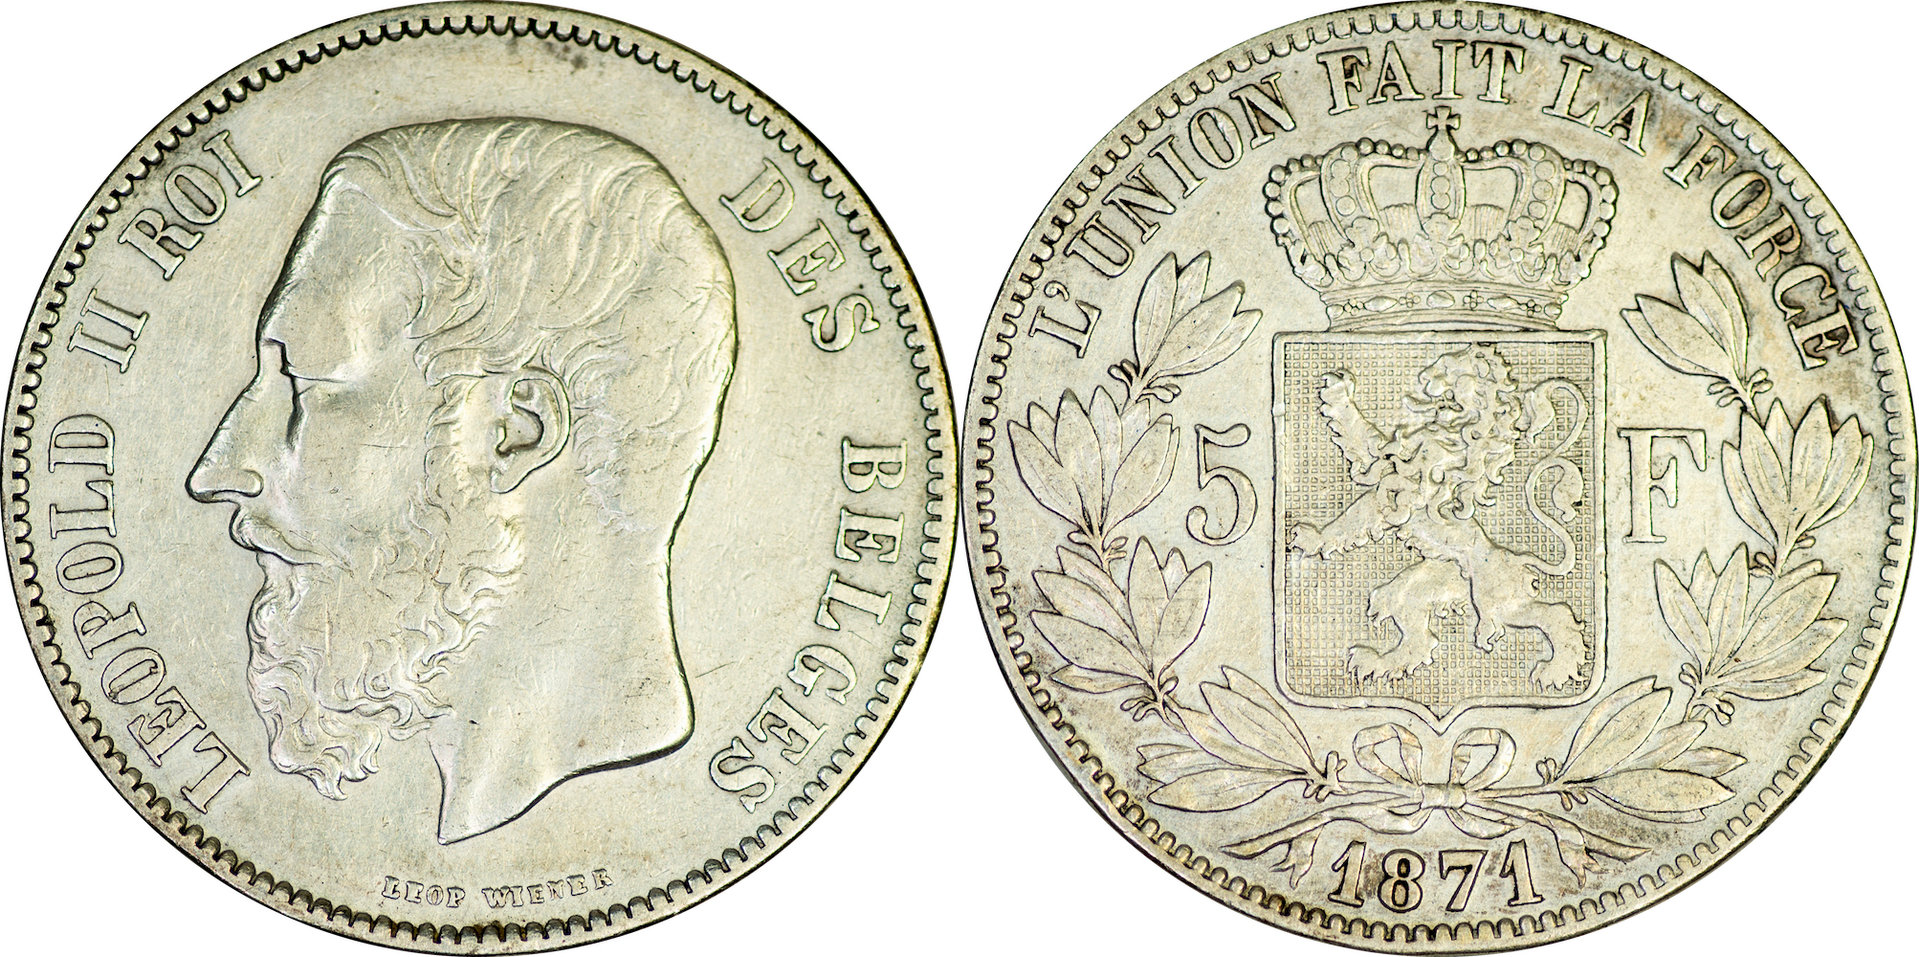 Belgium - 1871 5 Francs.jpg